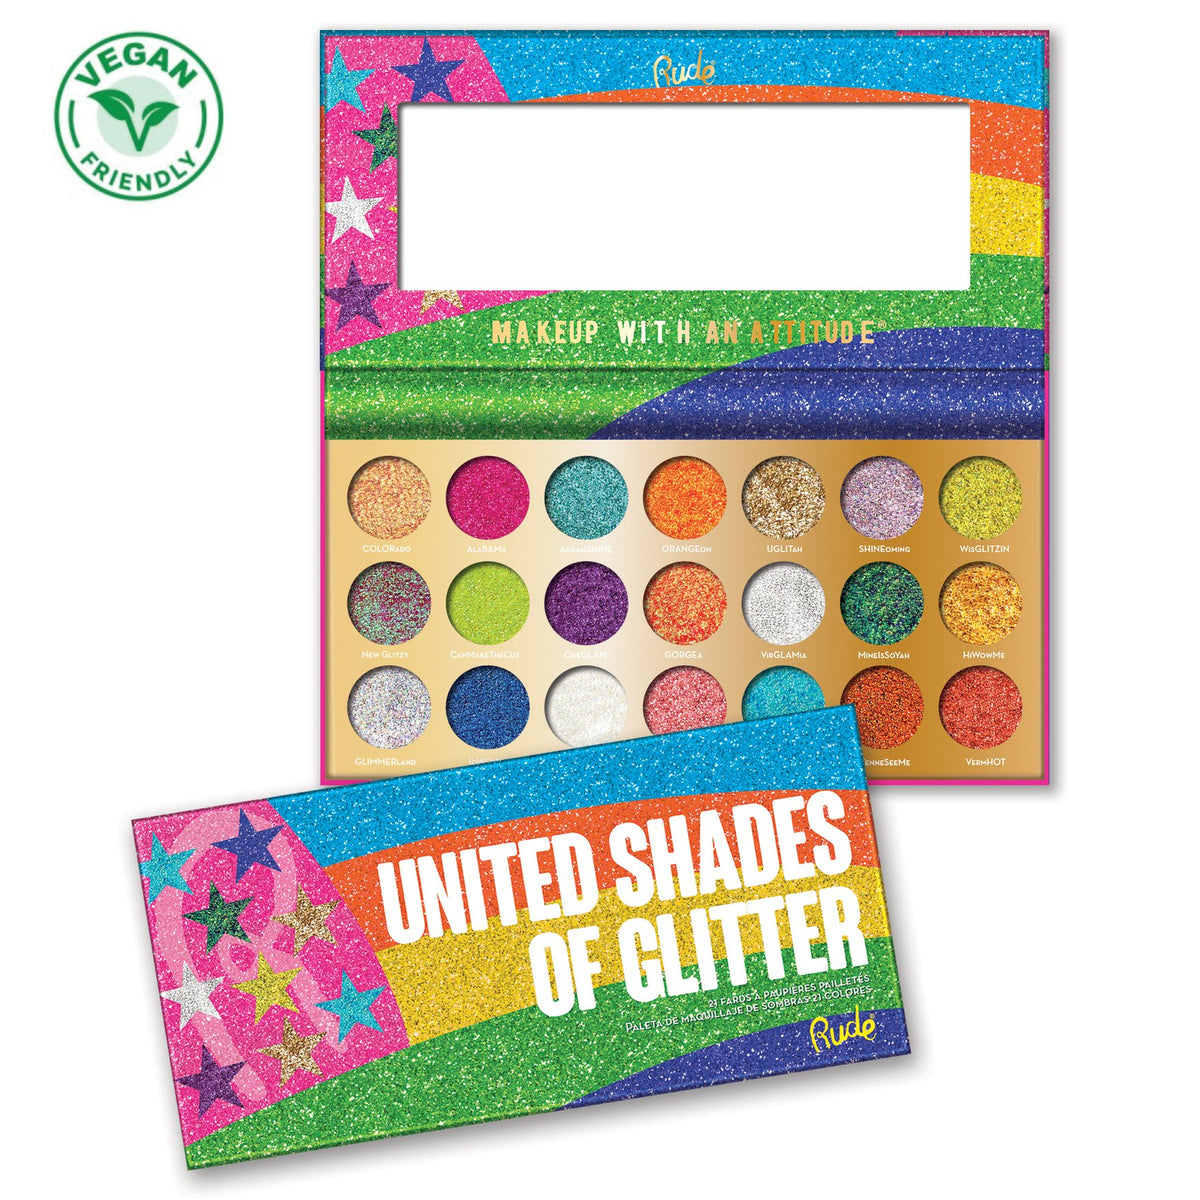 United Shades of Glitter Pressed Glitter Palette Display Set, 12pcs